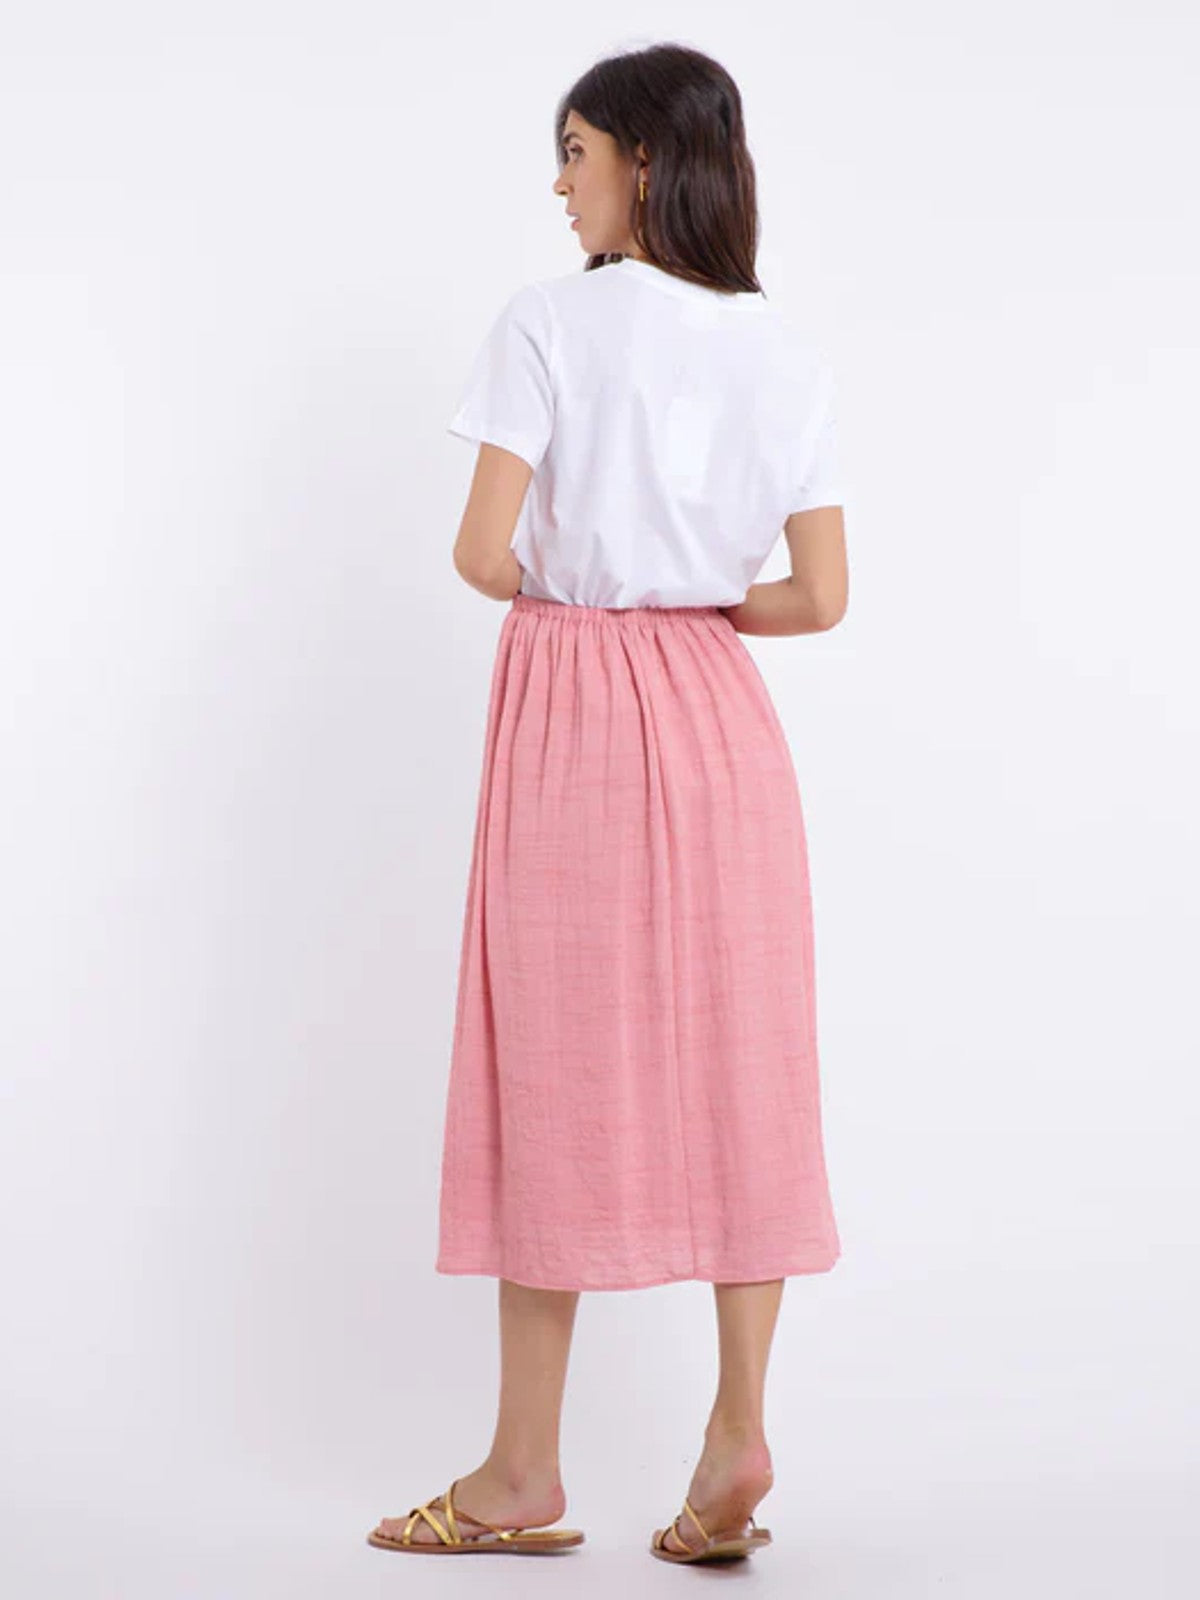 Auxane Skirt